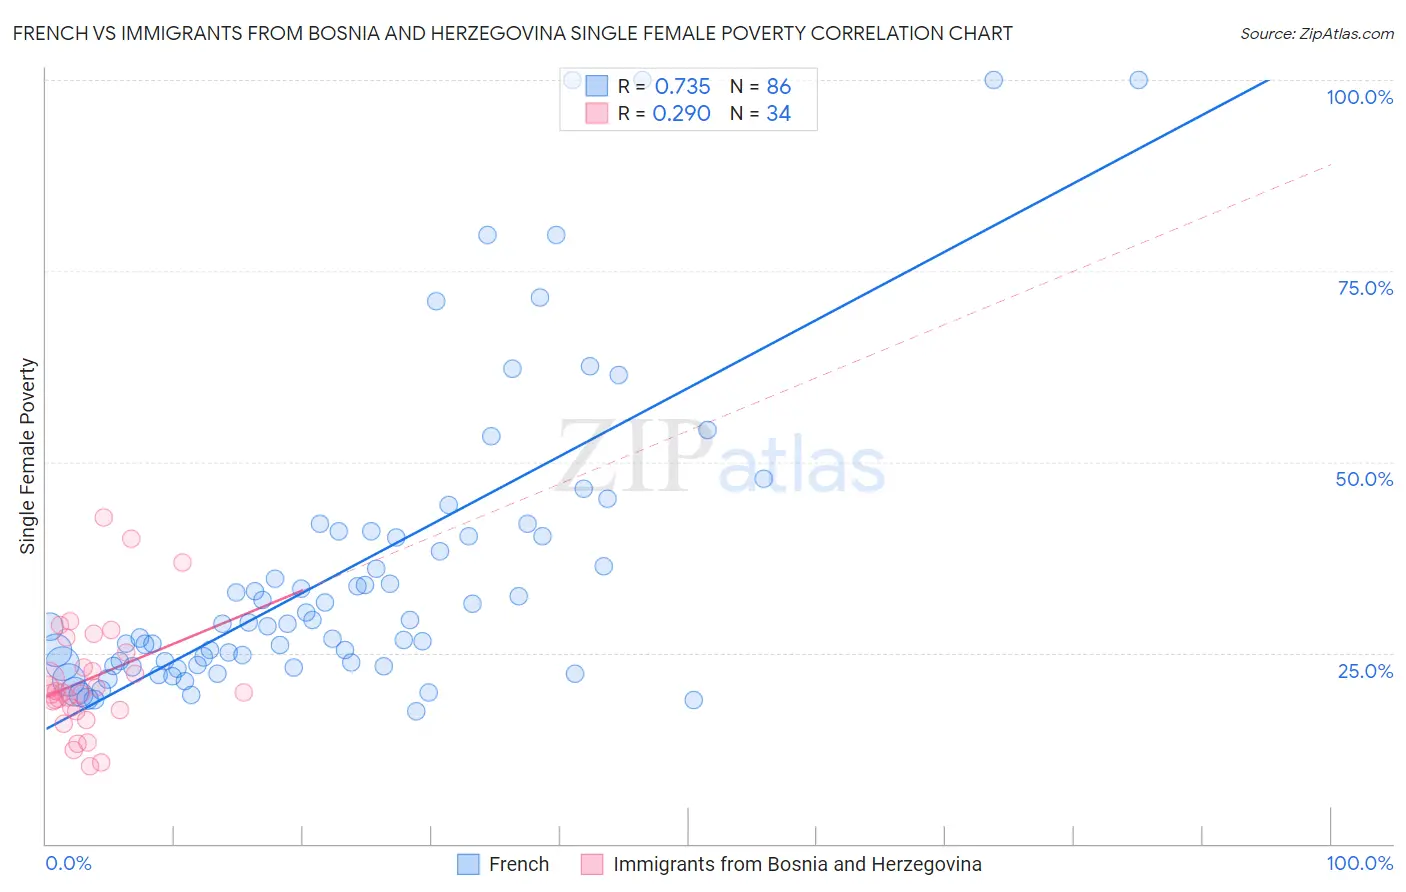 French vs Immigrants from Bosnia and Herzegovina Single Female Poverty